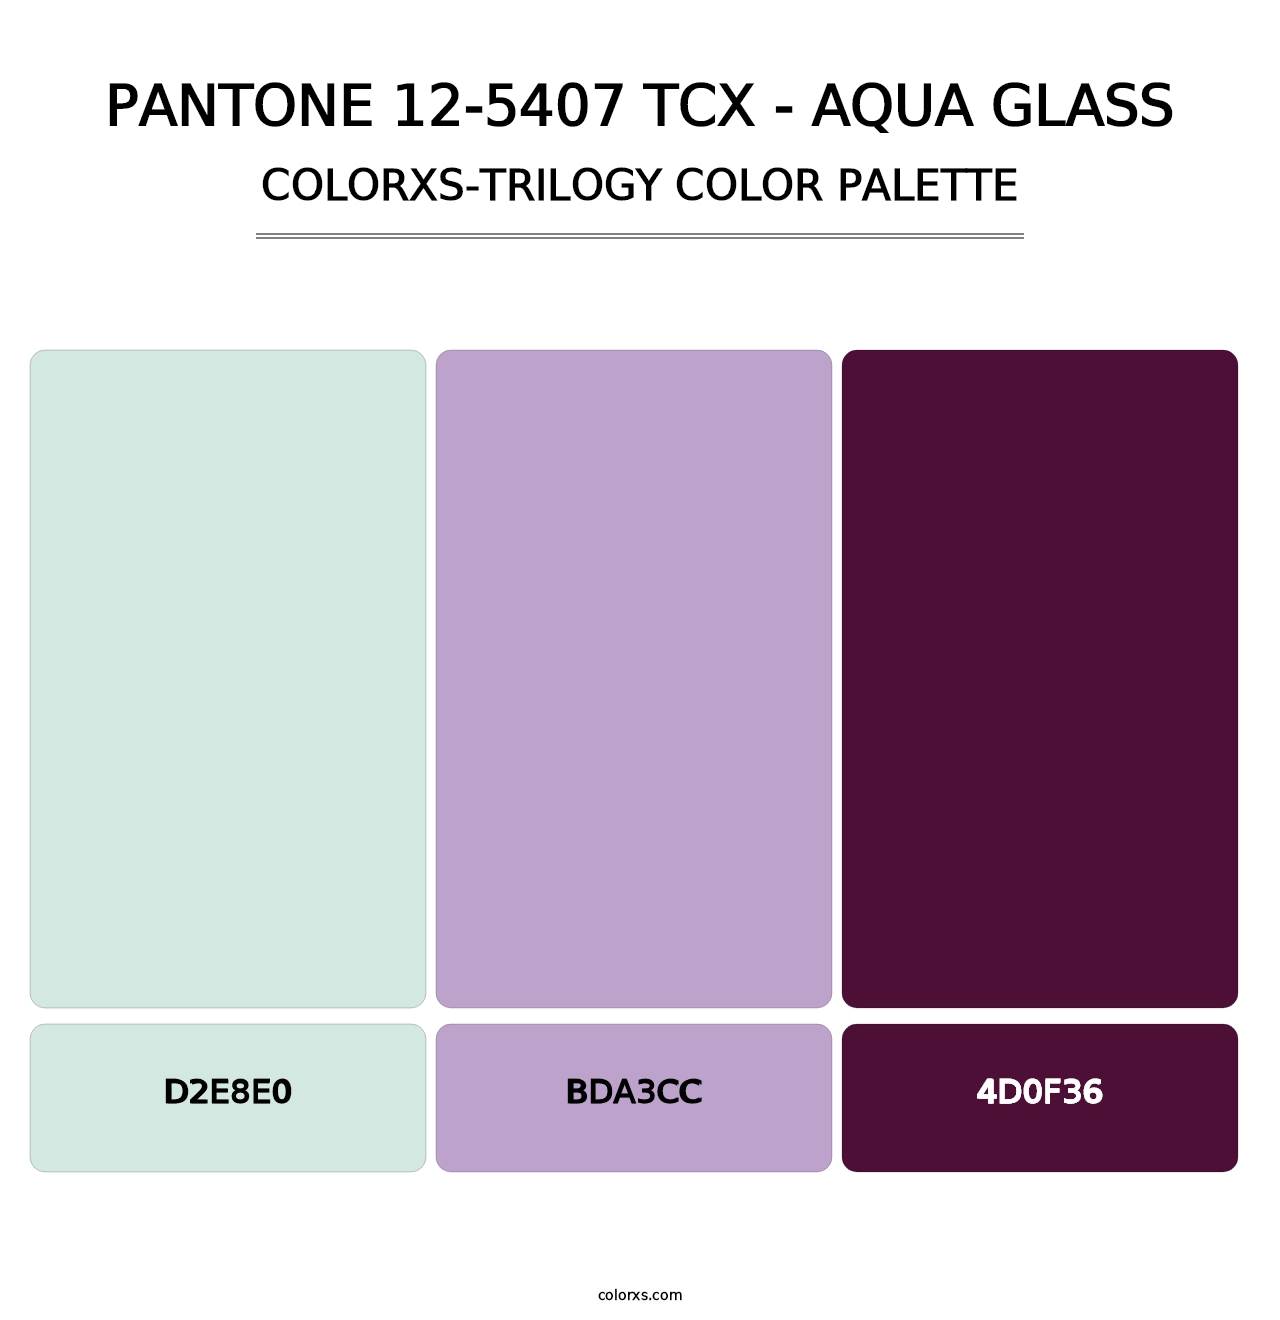 PANTONE 12-5407 TCX - Aqua Glass - Colorxs Trilogy Palette